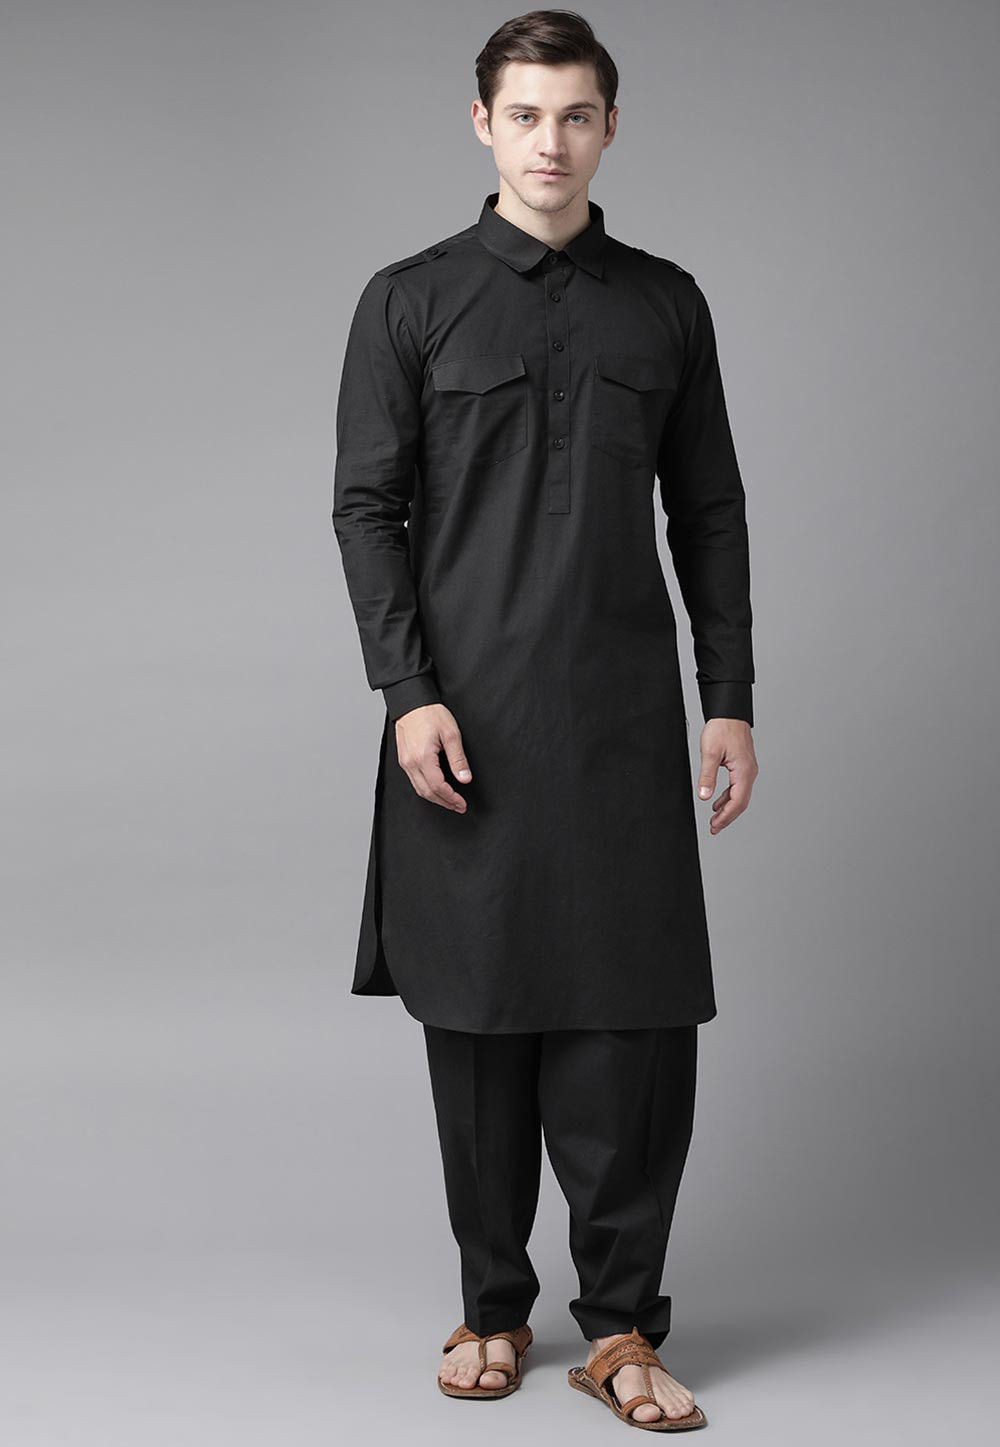 Basic black solid pathani suit in cotton | Pathani kurta, Jet black color,  Kurta designs